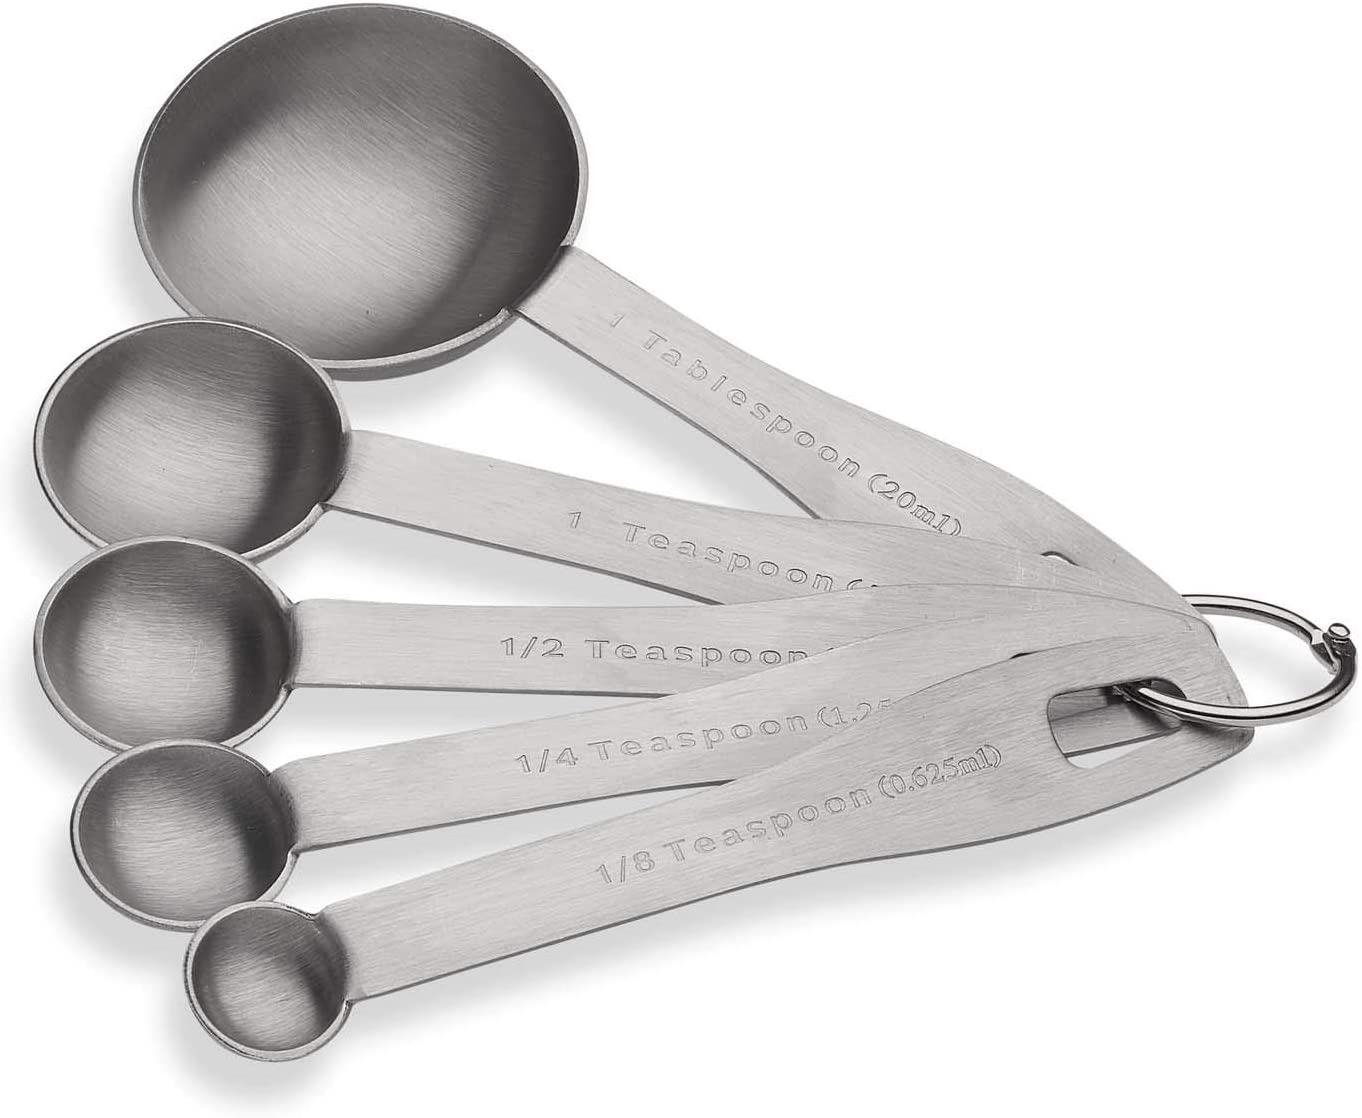 Product of the WeekAdjustable Measuring Spoon Set item #2258 $9.50 www. pamperedchef.biz/allisondominic